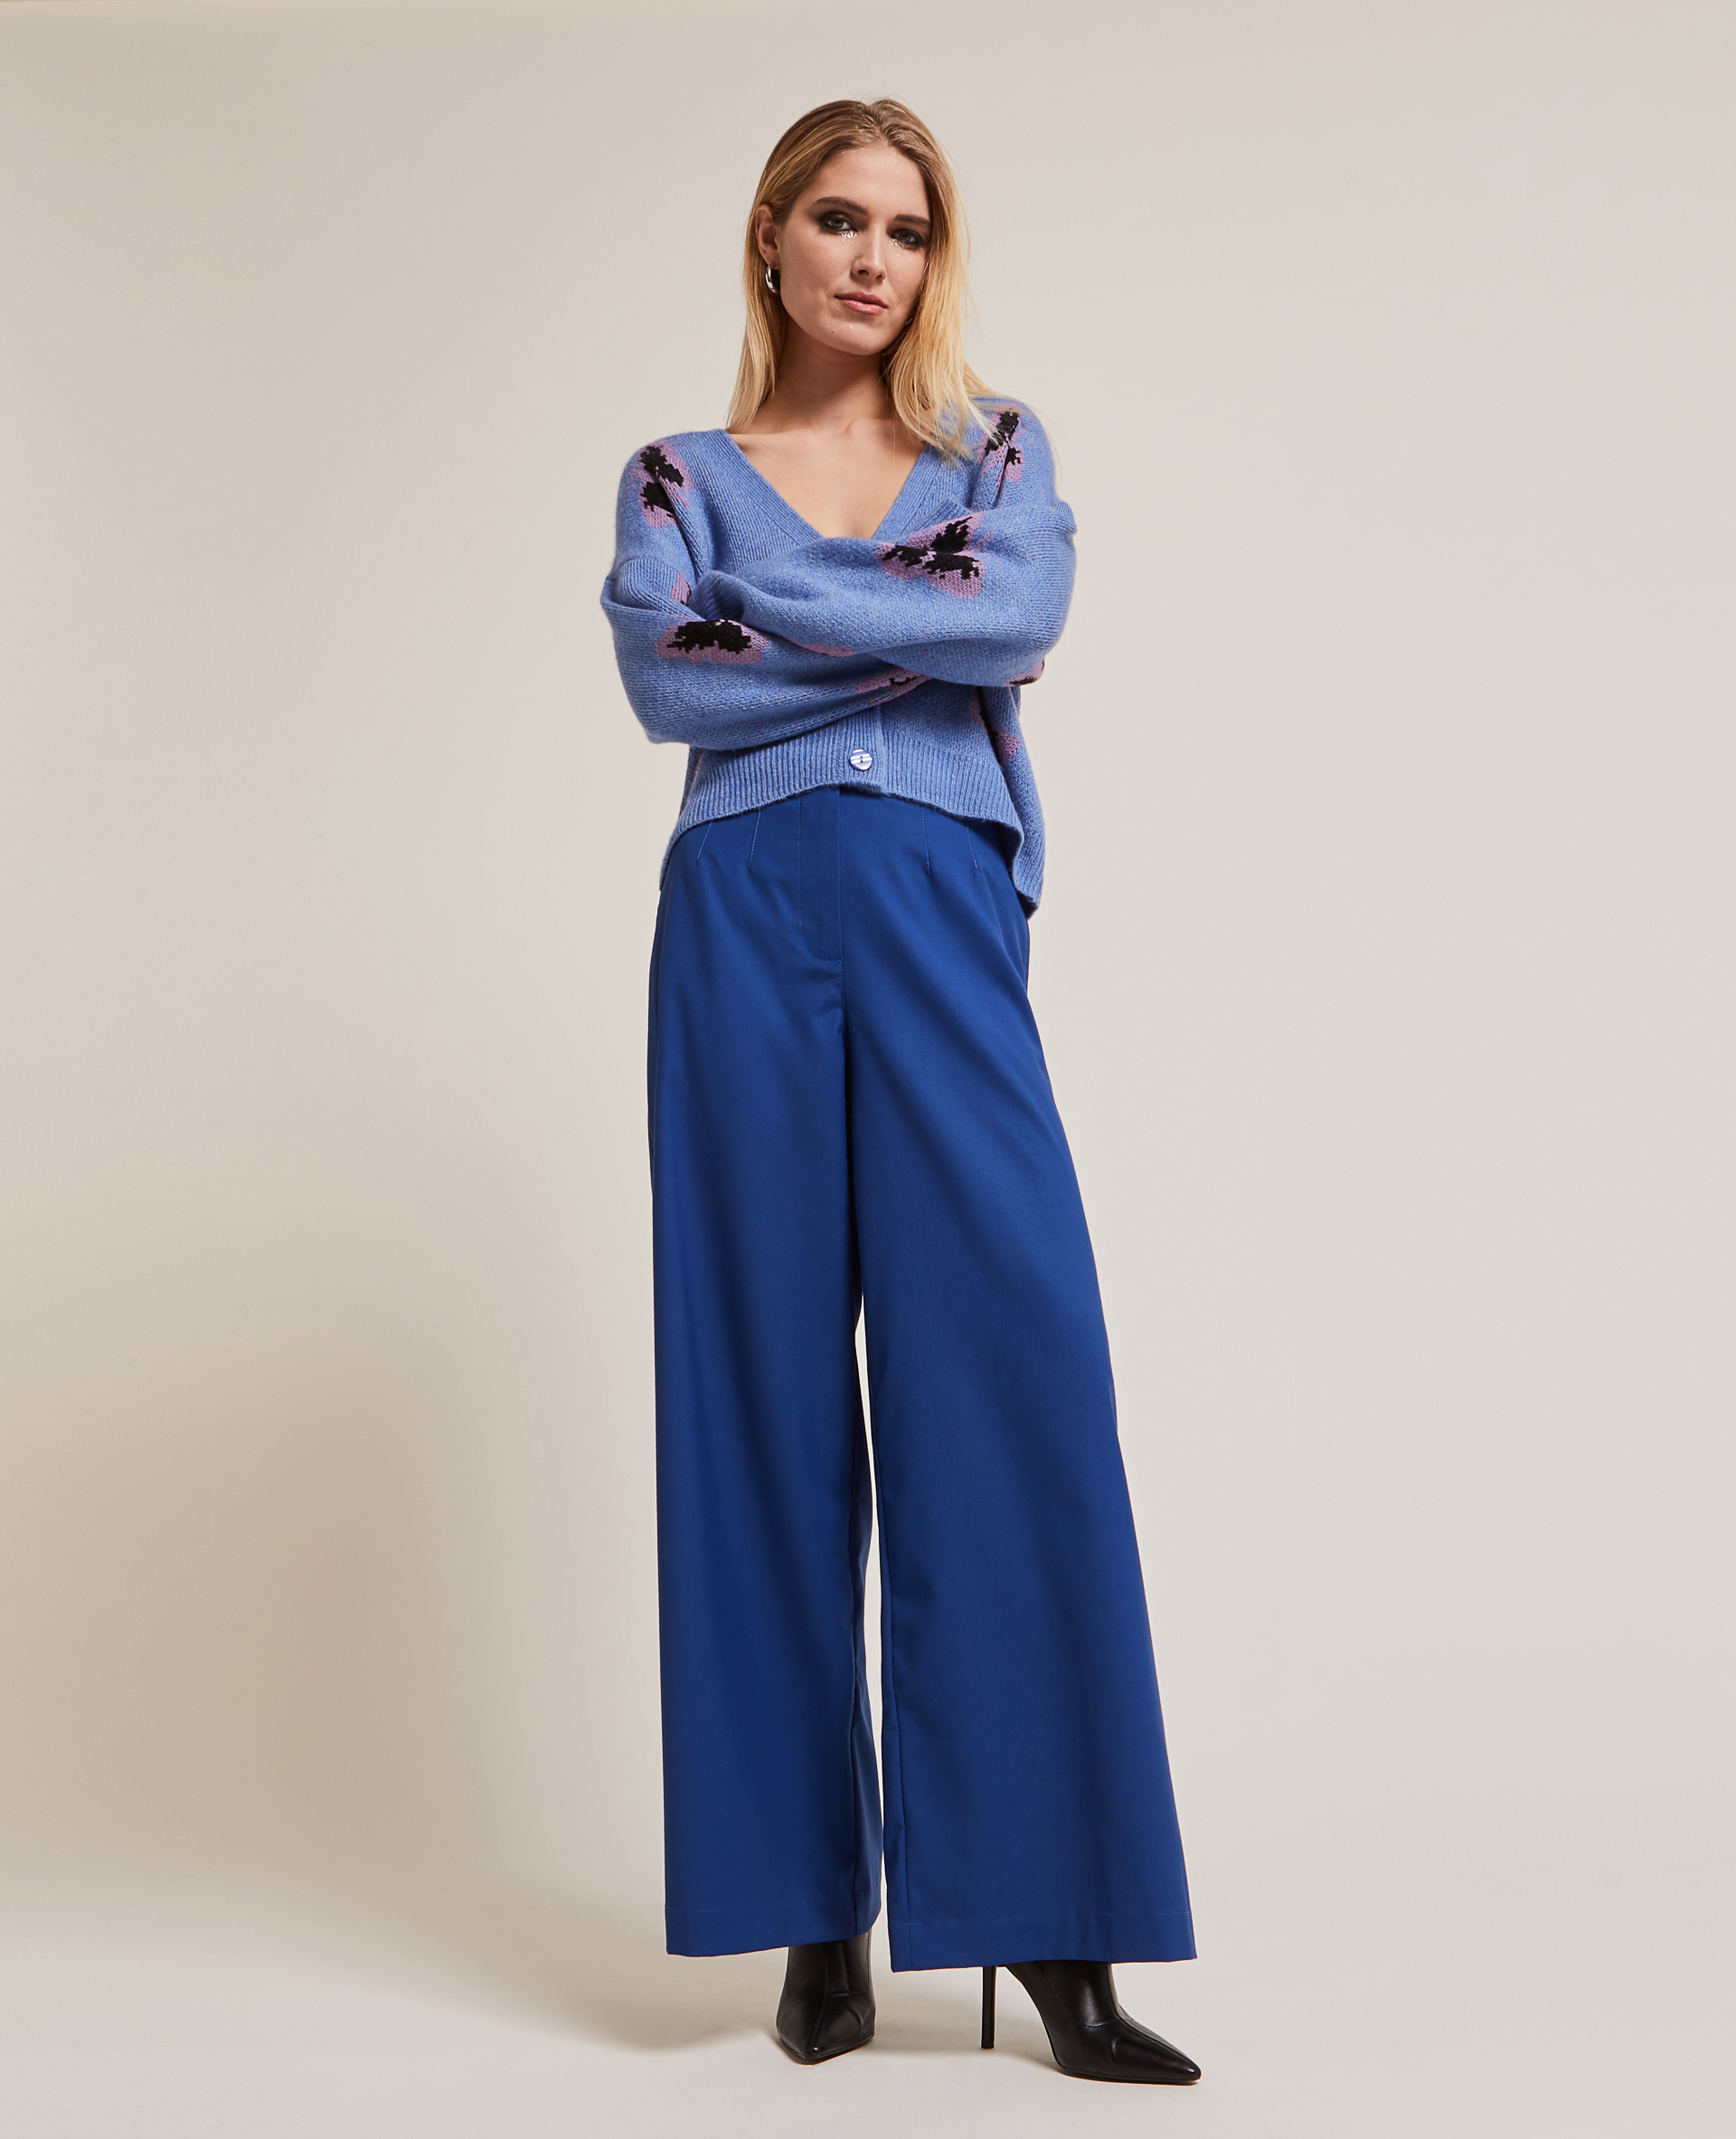 Pantalon large en toile bleu marine - Pimkie